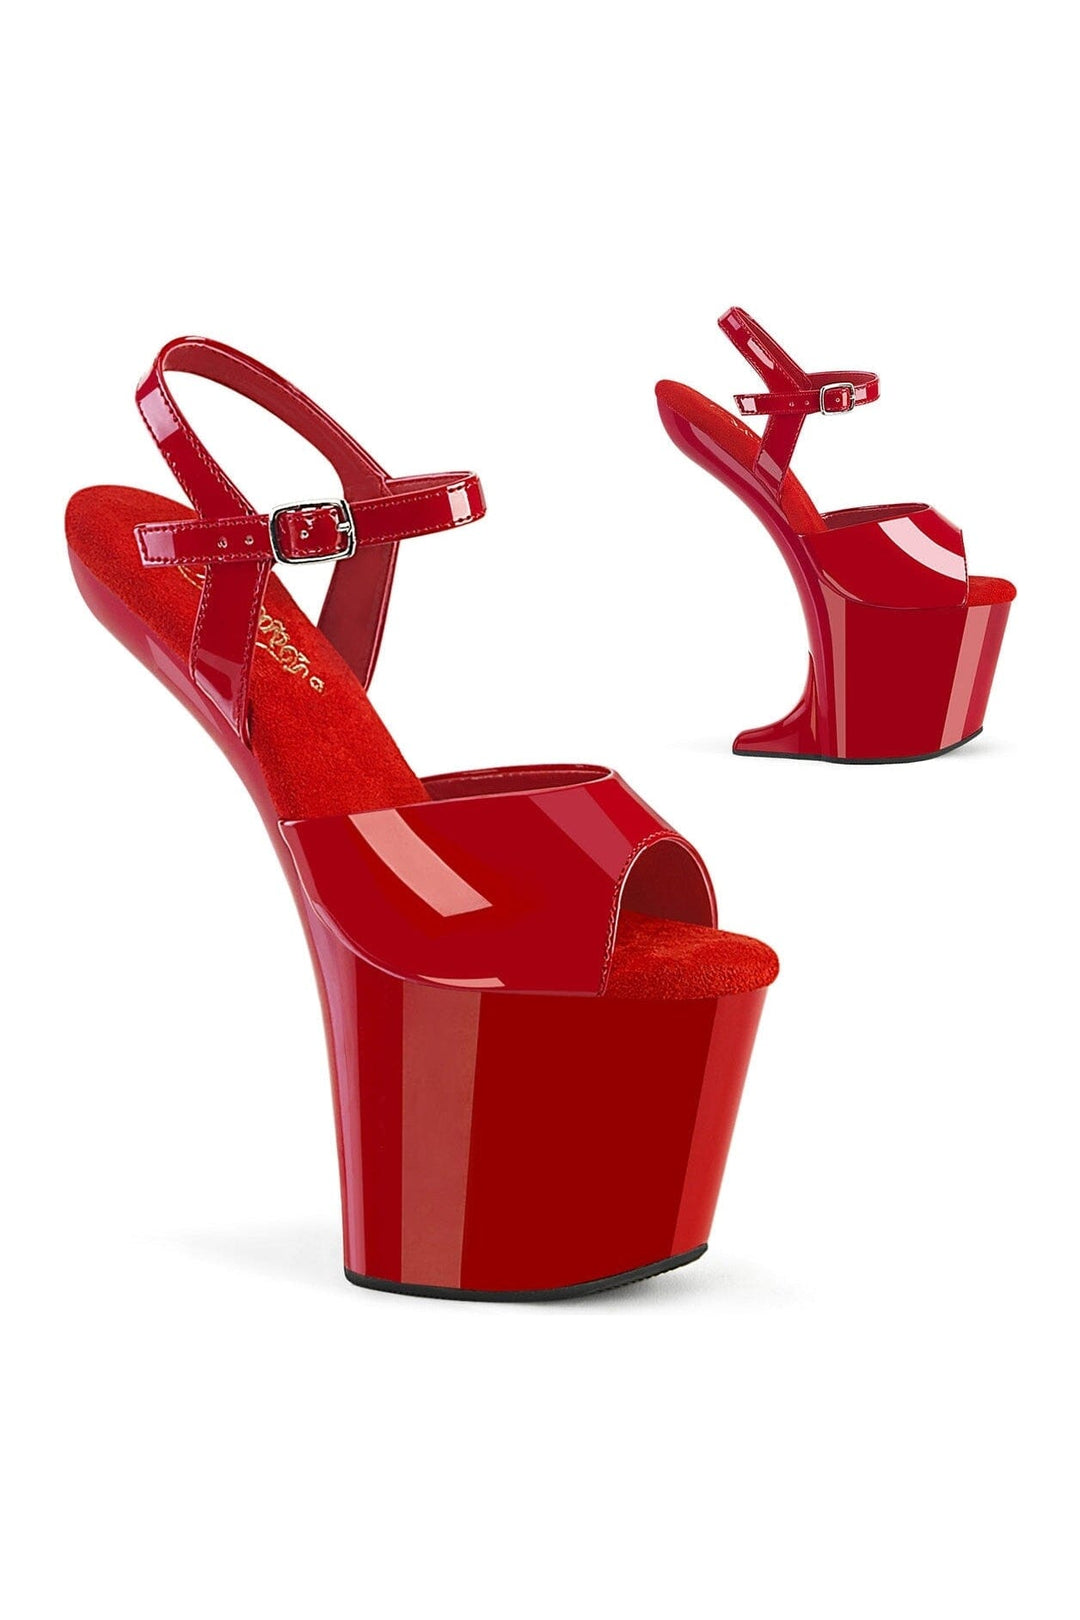 CRAZE-809 Red Patent Sandal-Sandals- Stripper Shoes at SEXYSHOES.COM